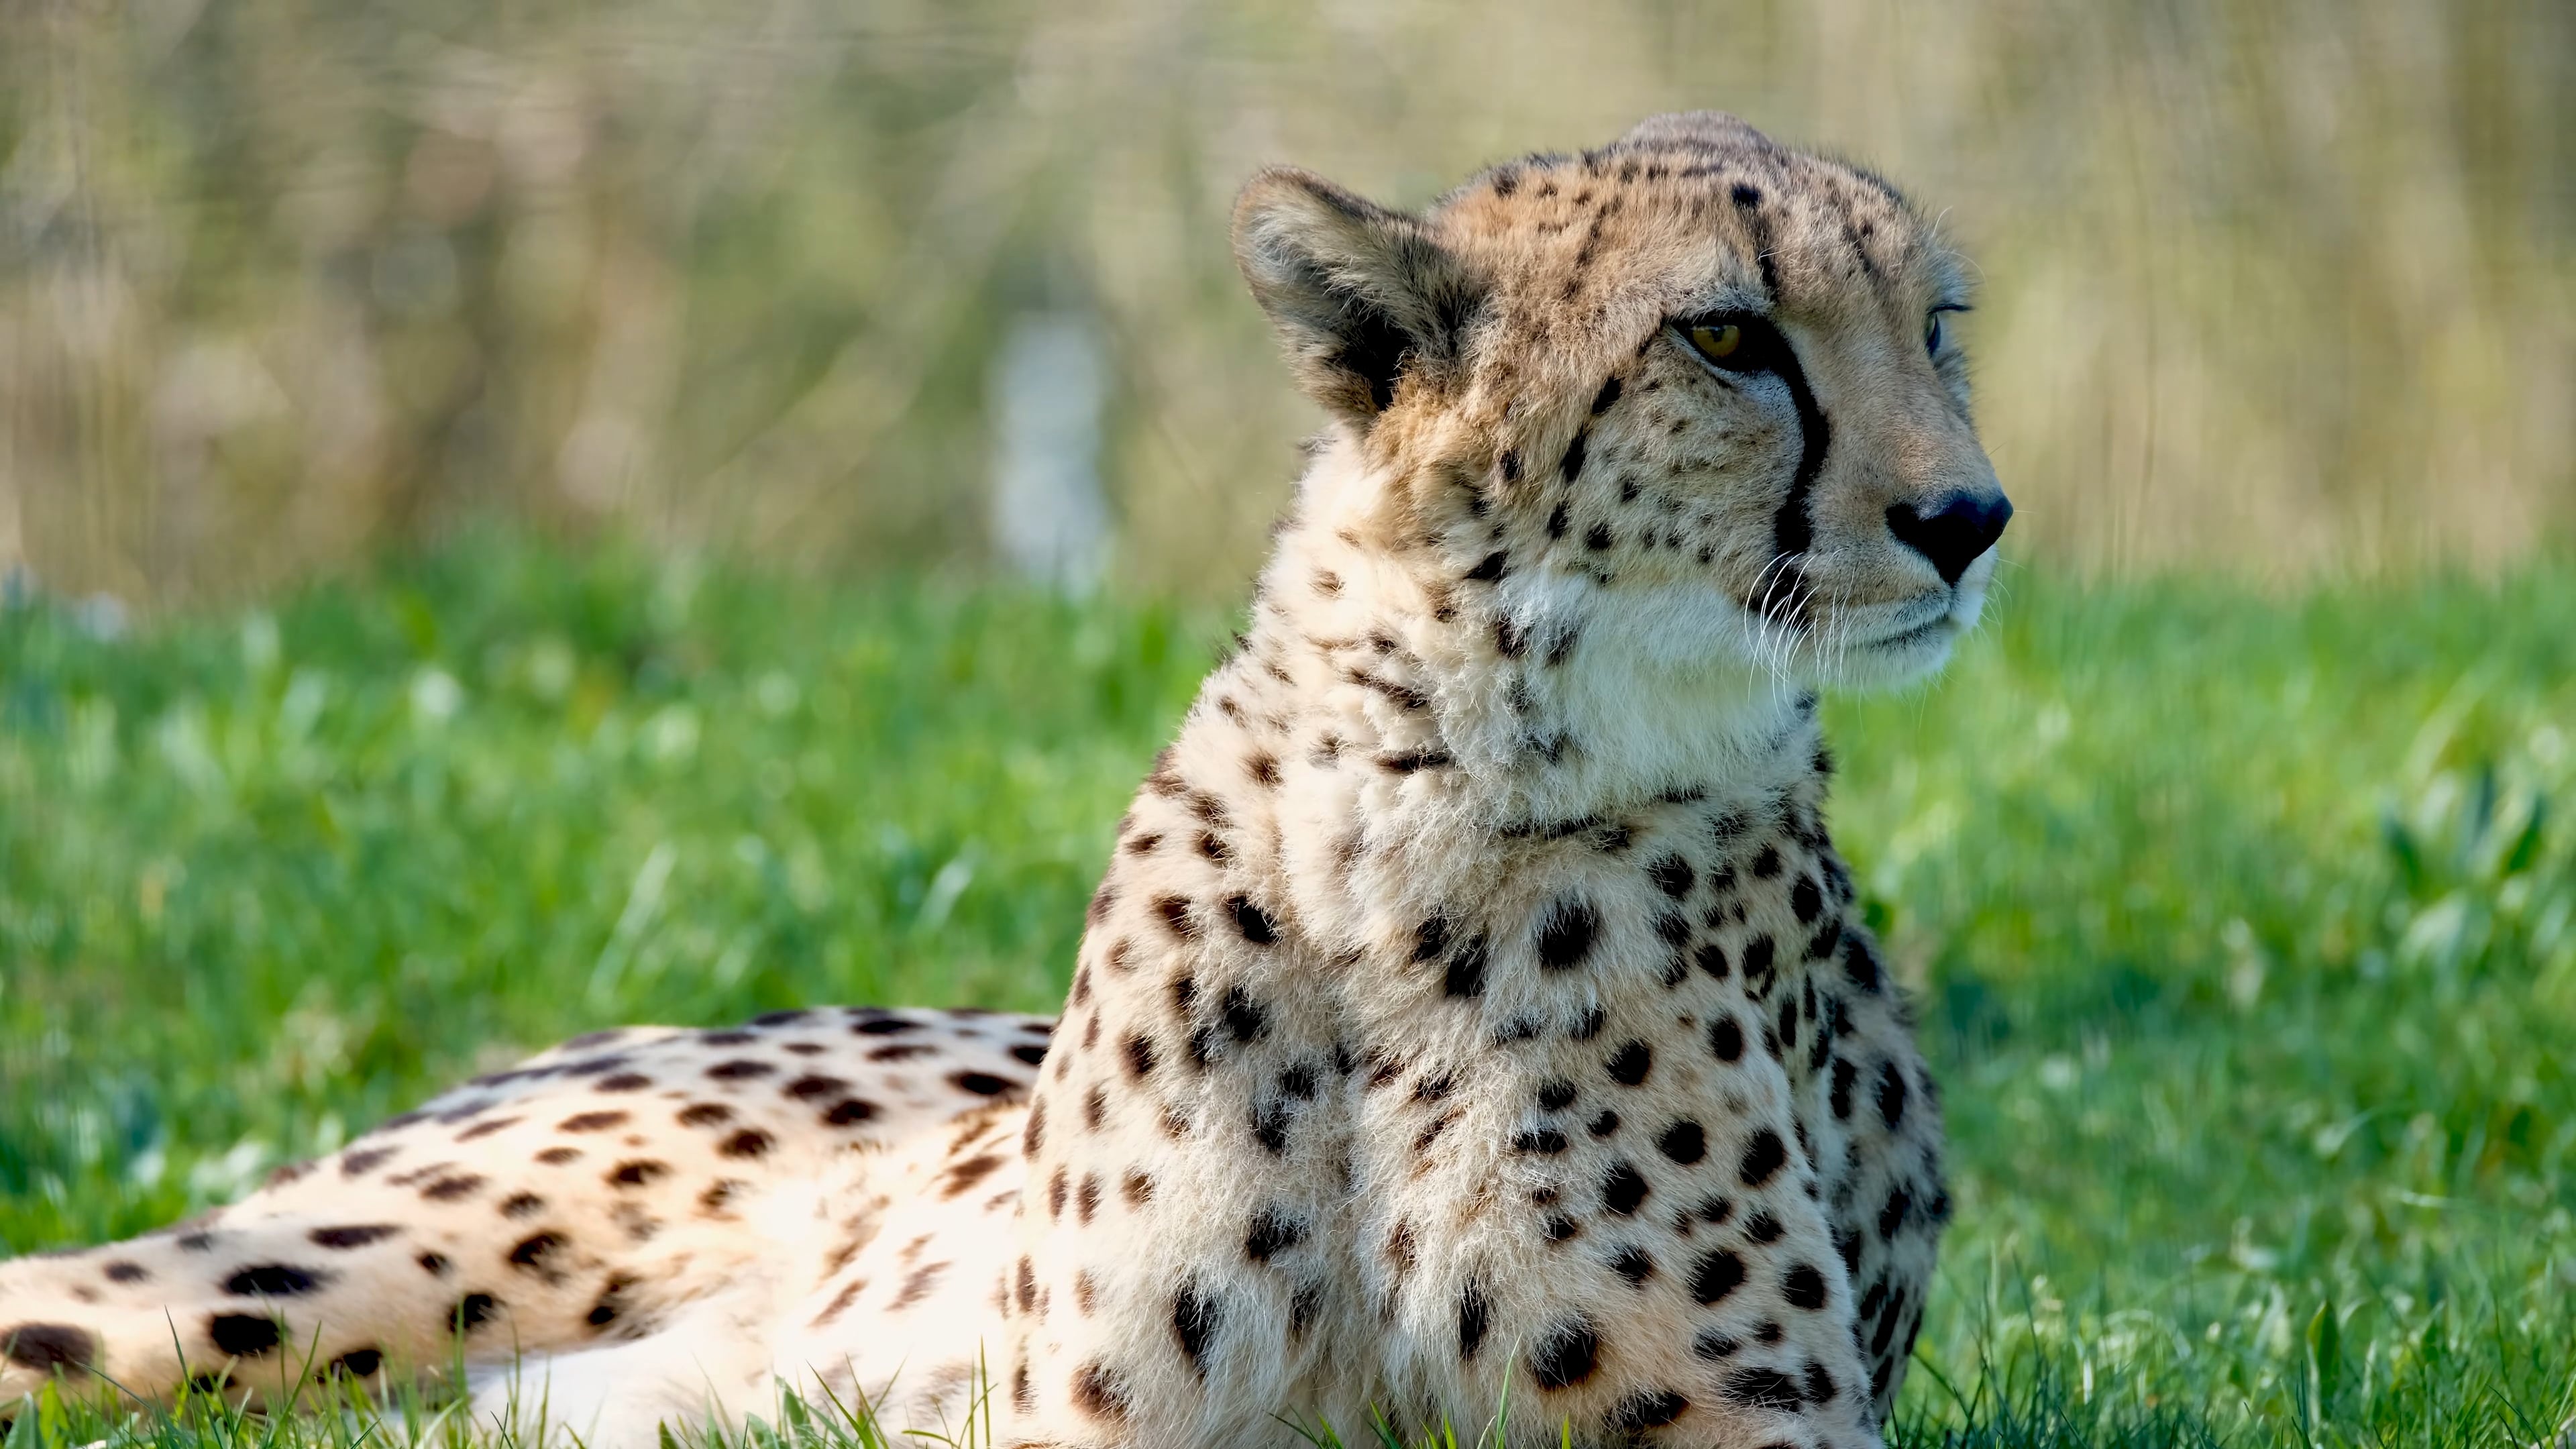 Relaxed cheetah, Lush green grass, Peaceful scenery, Wildlife observation, 3840x2160 4K Desktop